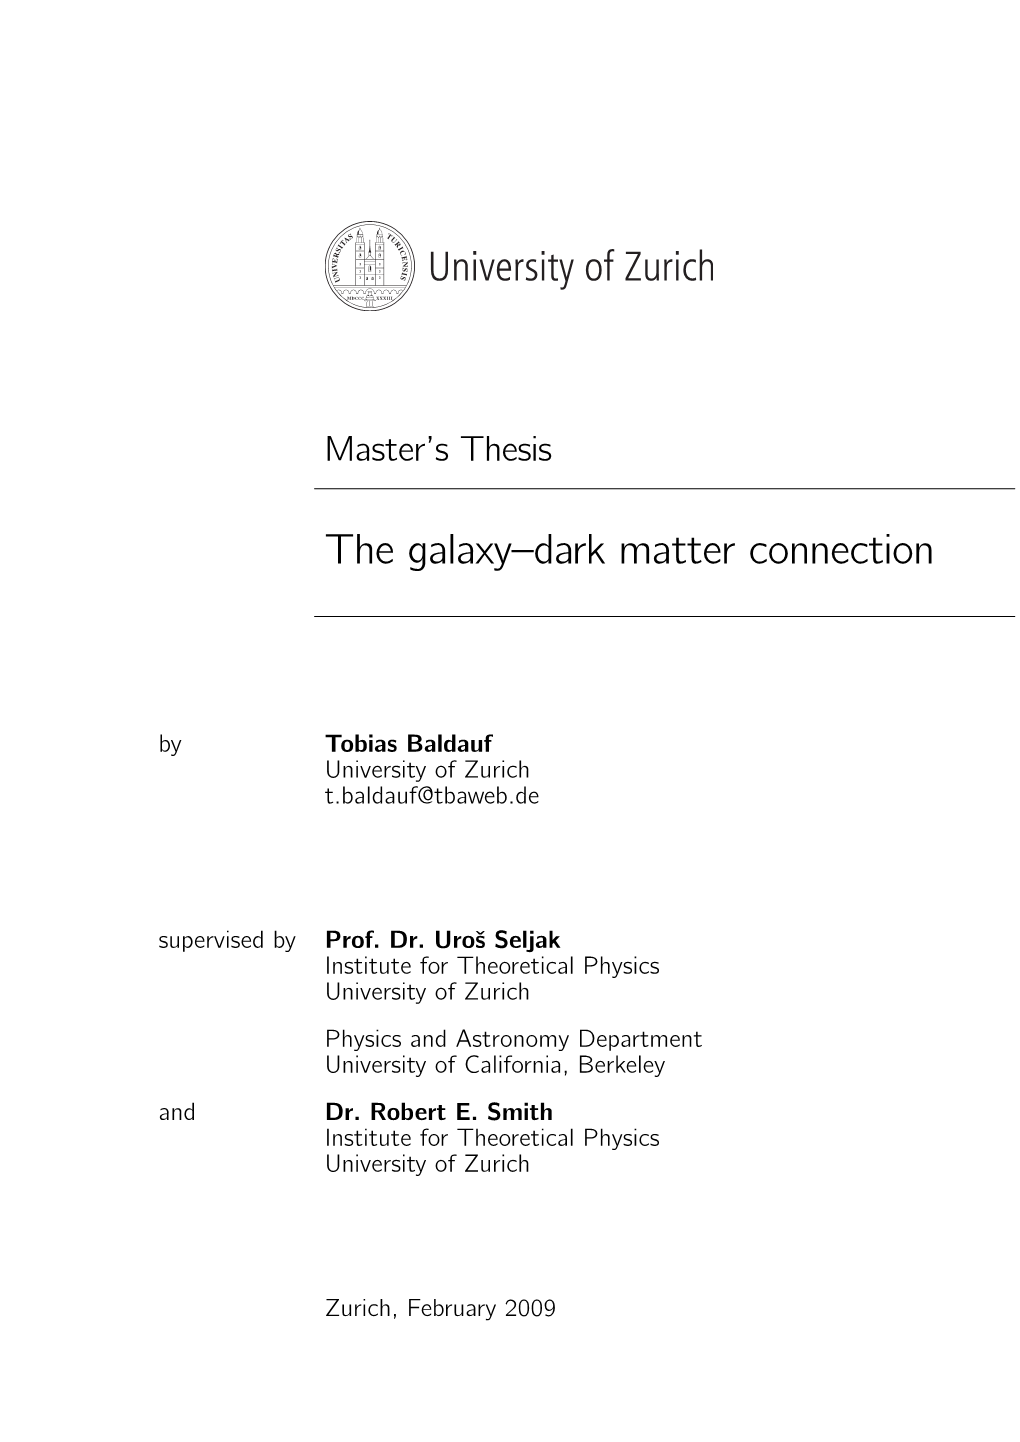 The Galaxy–Dark Matter Connection